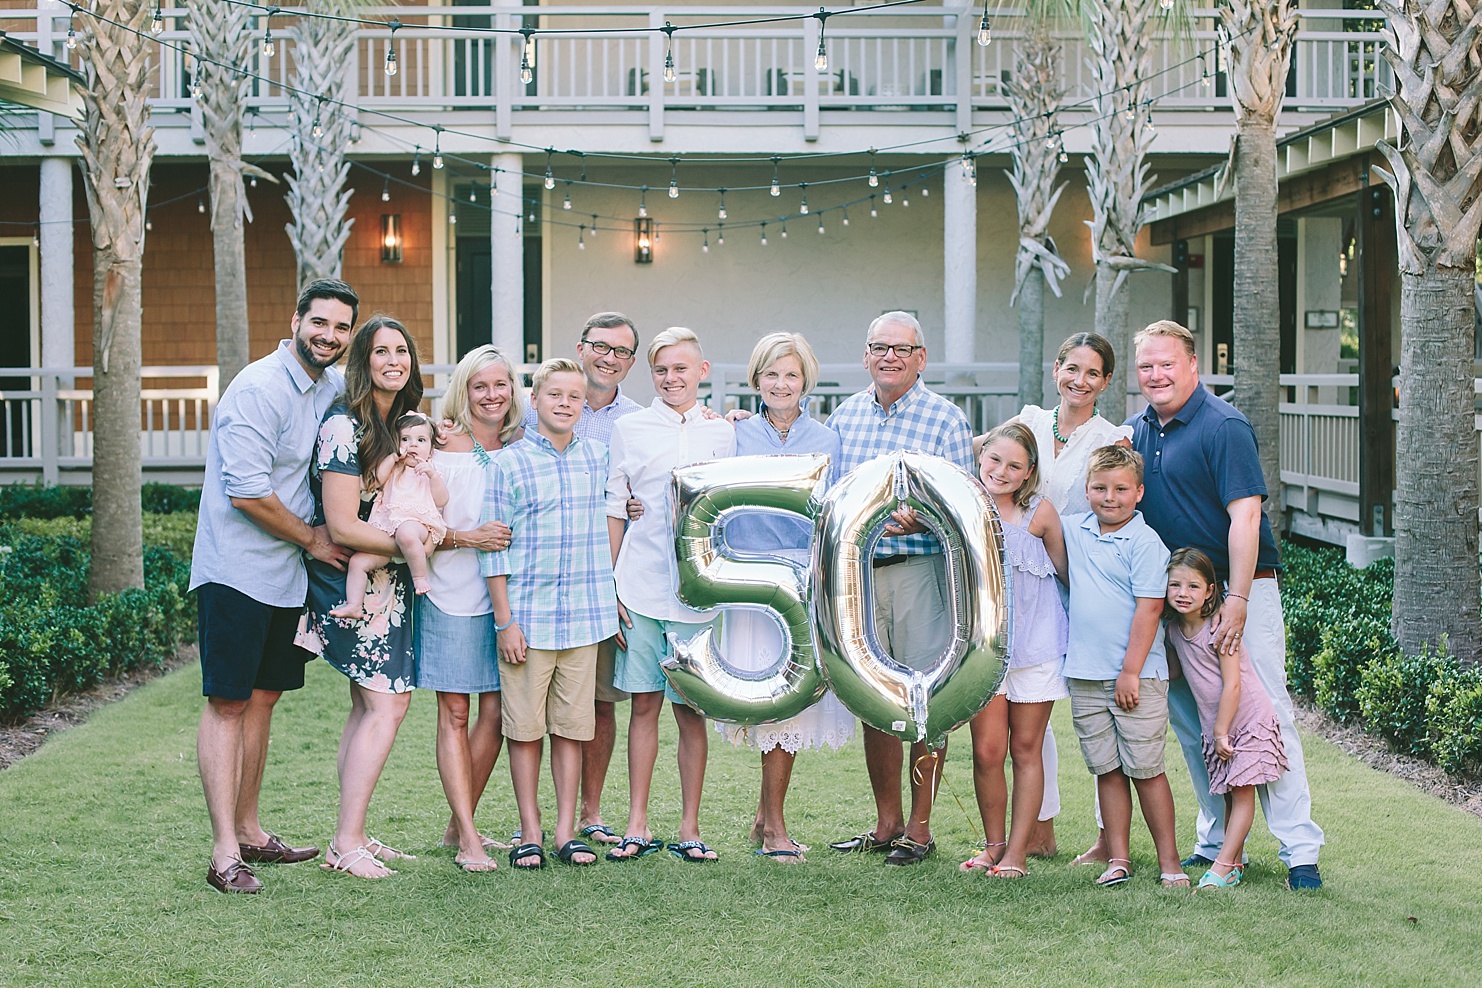 Family celebrating grandparents' 50th anniversary.